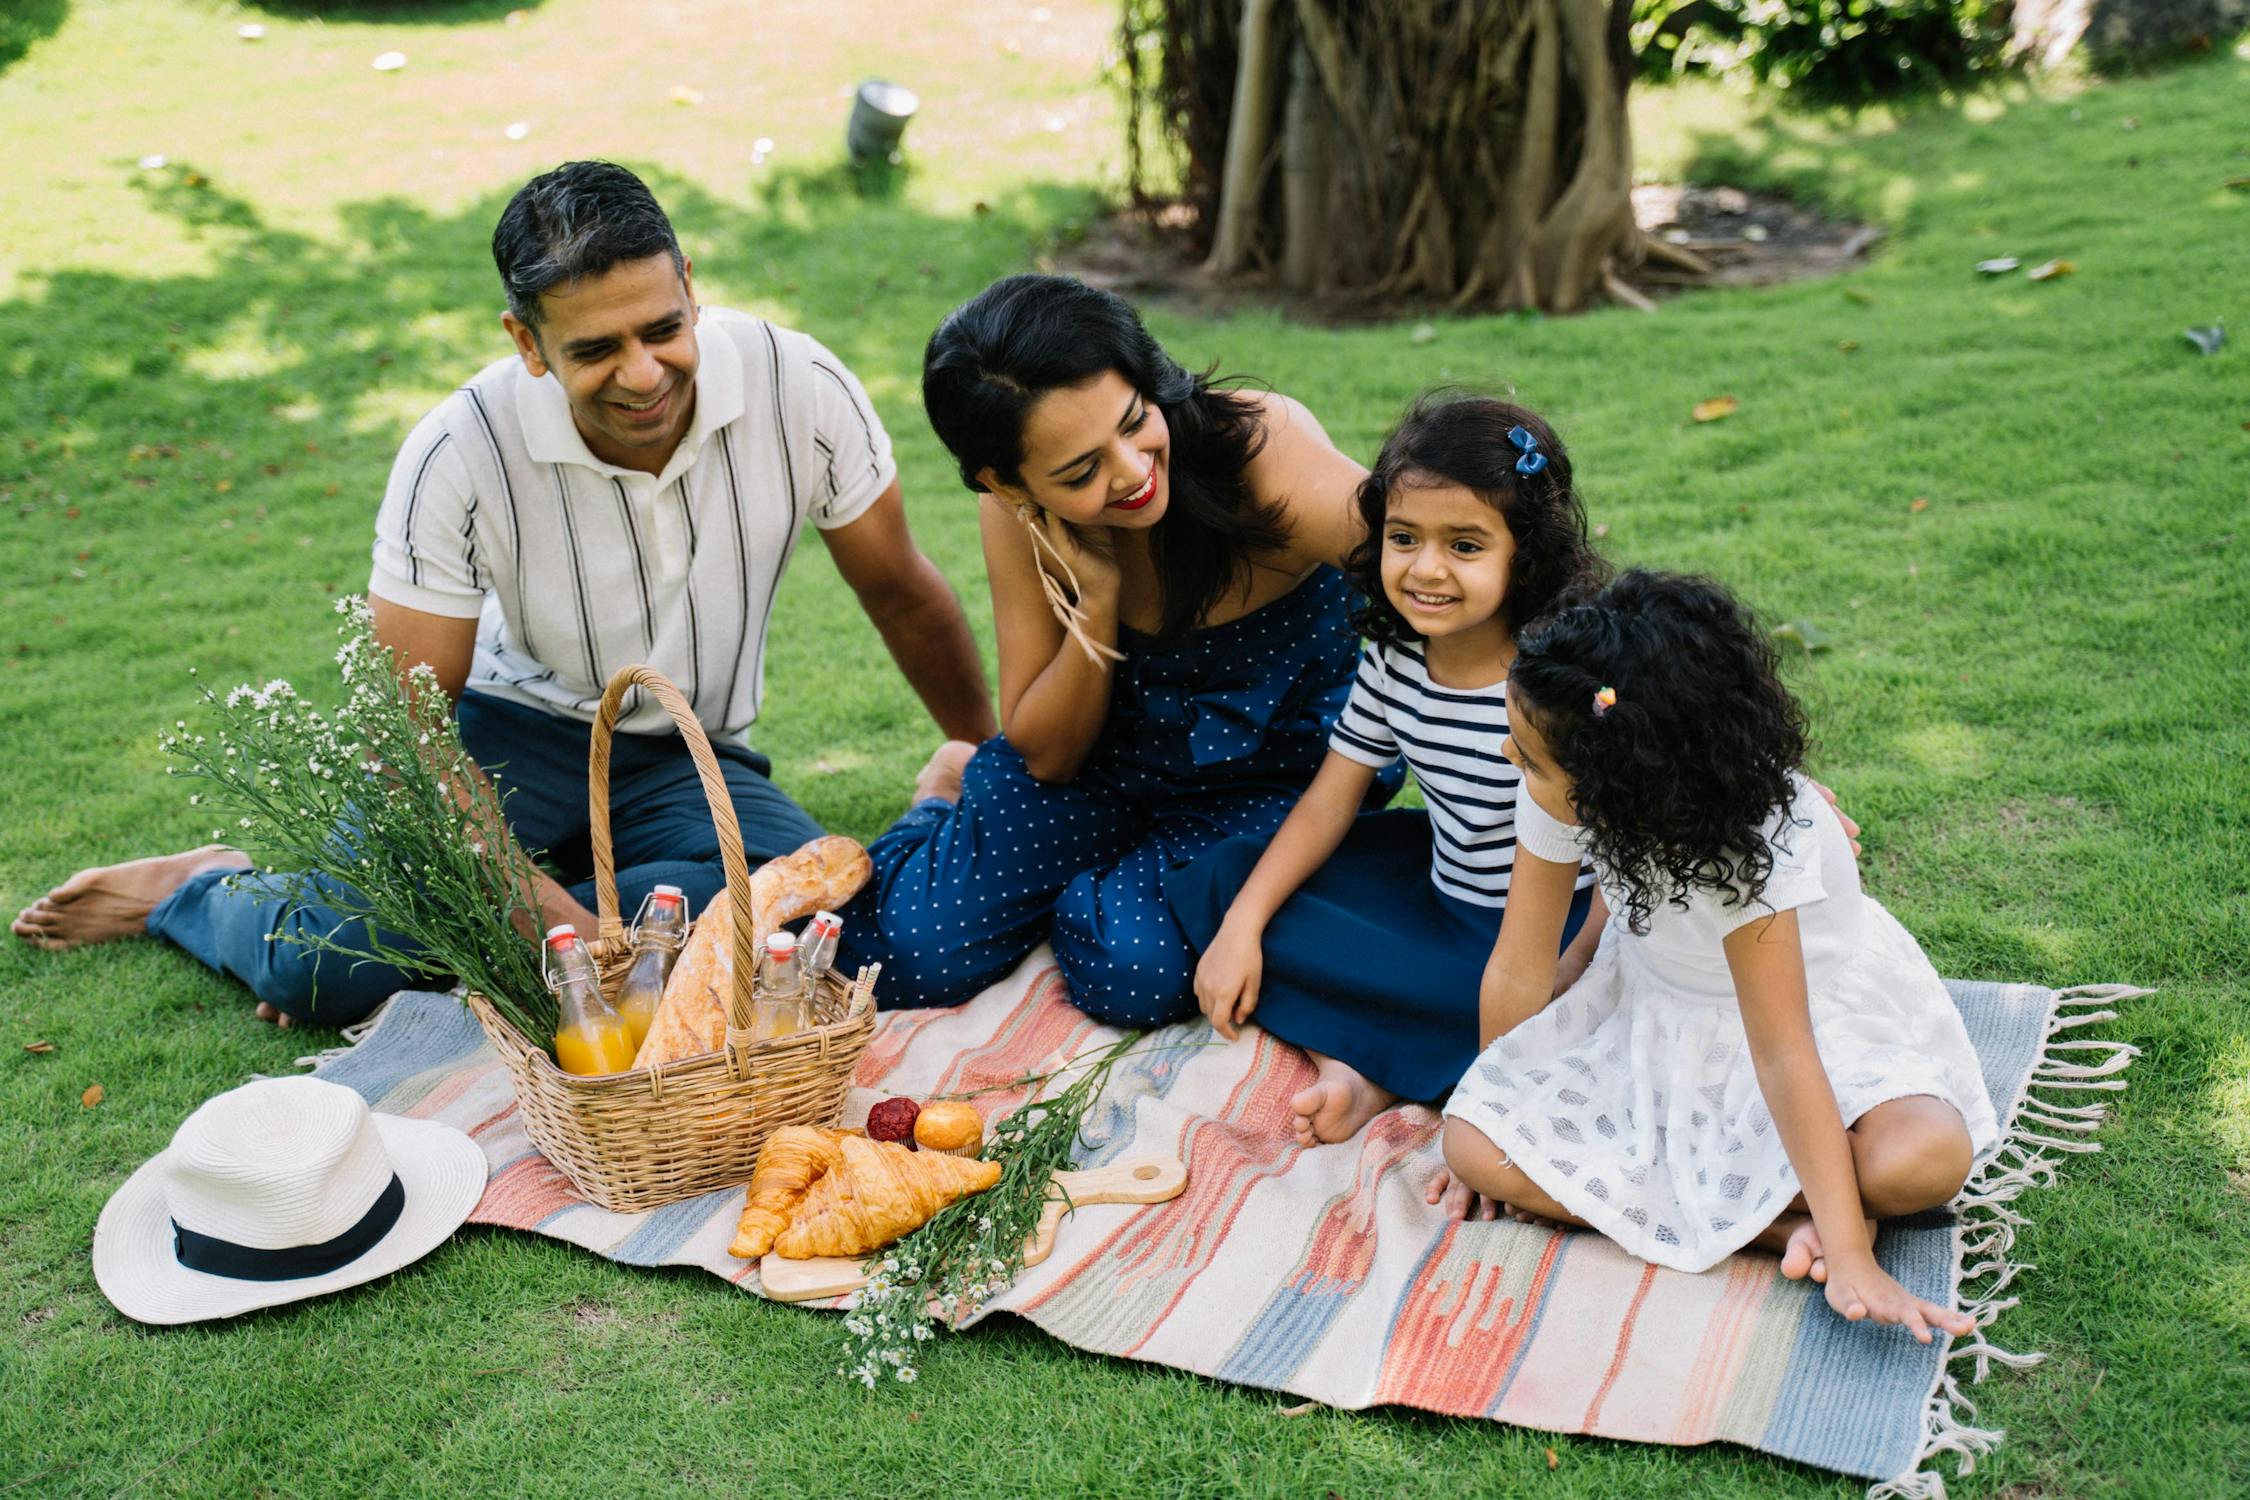 Family Picnic Photo by Anna Tarazevich from Pexels: https://www.pexels.com/photo/family-having-a-picnic-5119595/